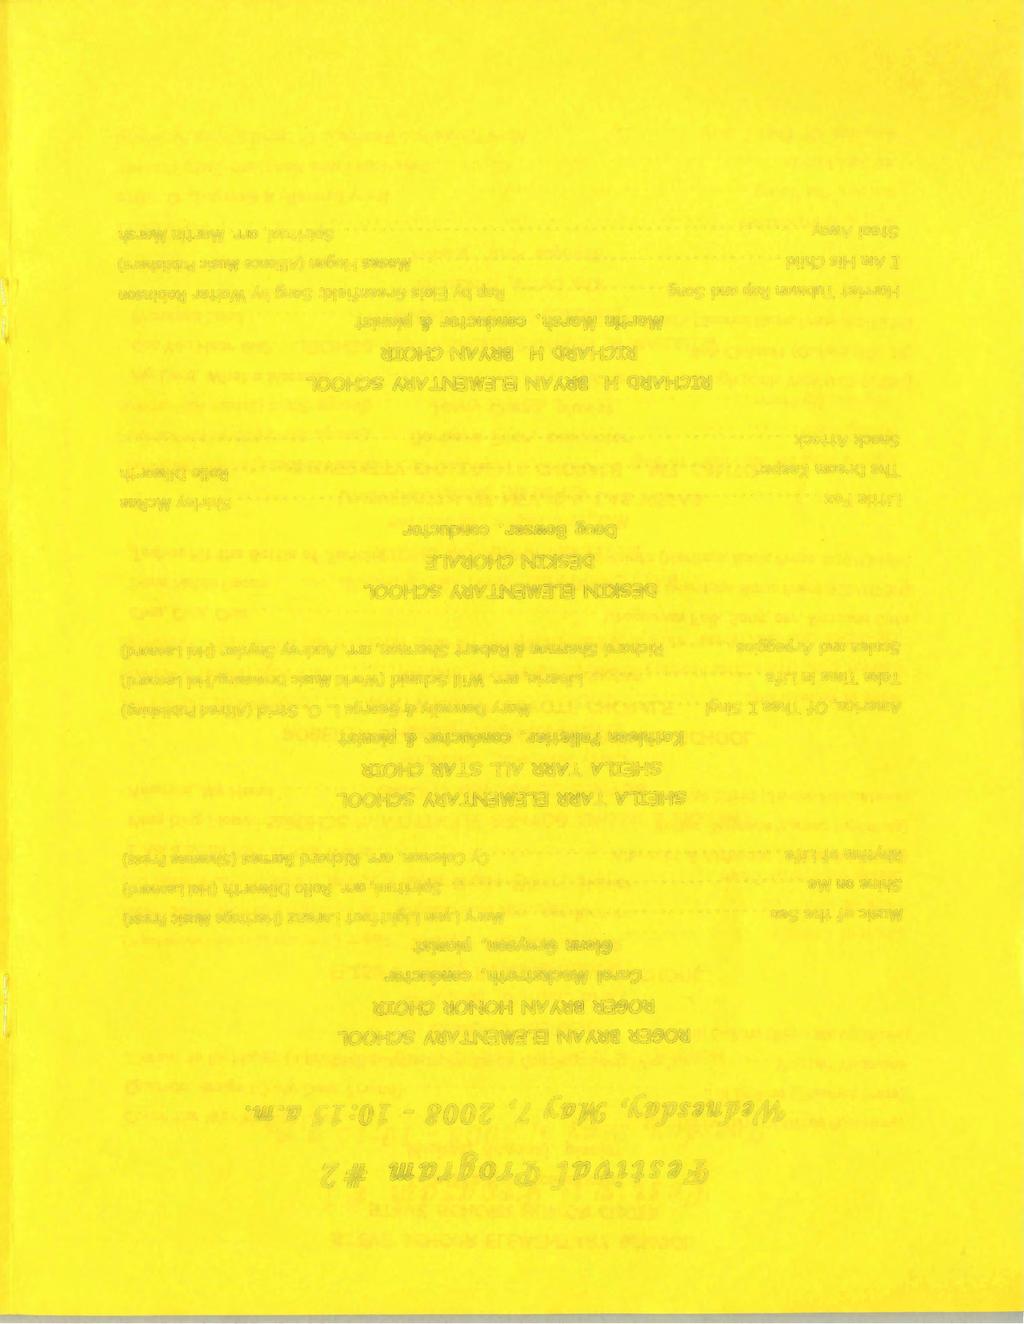 Pestva[ fprogram # 2 Wednesday, :M.ay 7, 2008-10:15 a.m. ROGER BRYAN ELEMENTARY SCHOOL ROGER BRYAN HONOR CHOR Carol Meckstroth, conductor Glenn Grayson. panst Musc of the Sea.